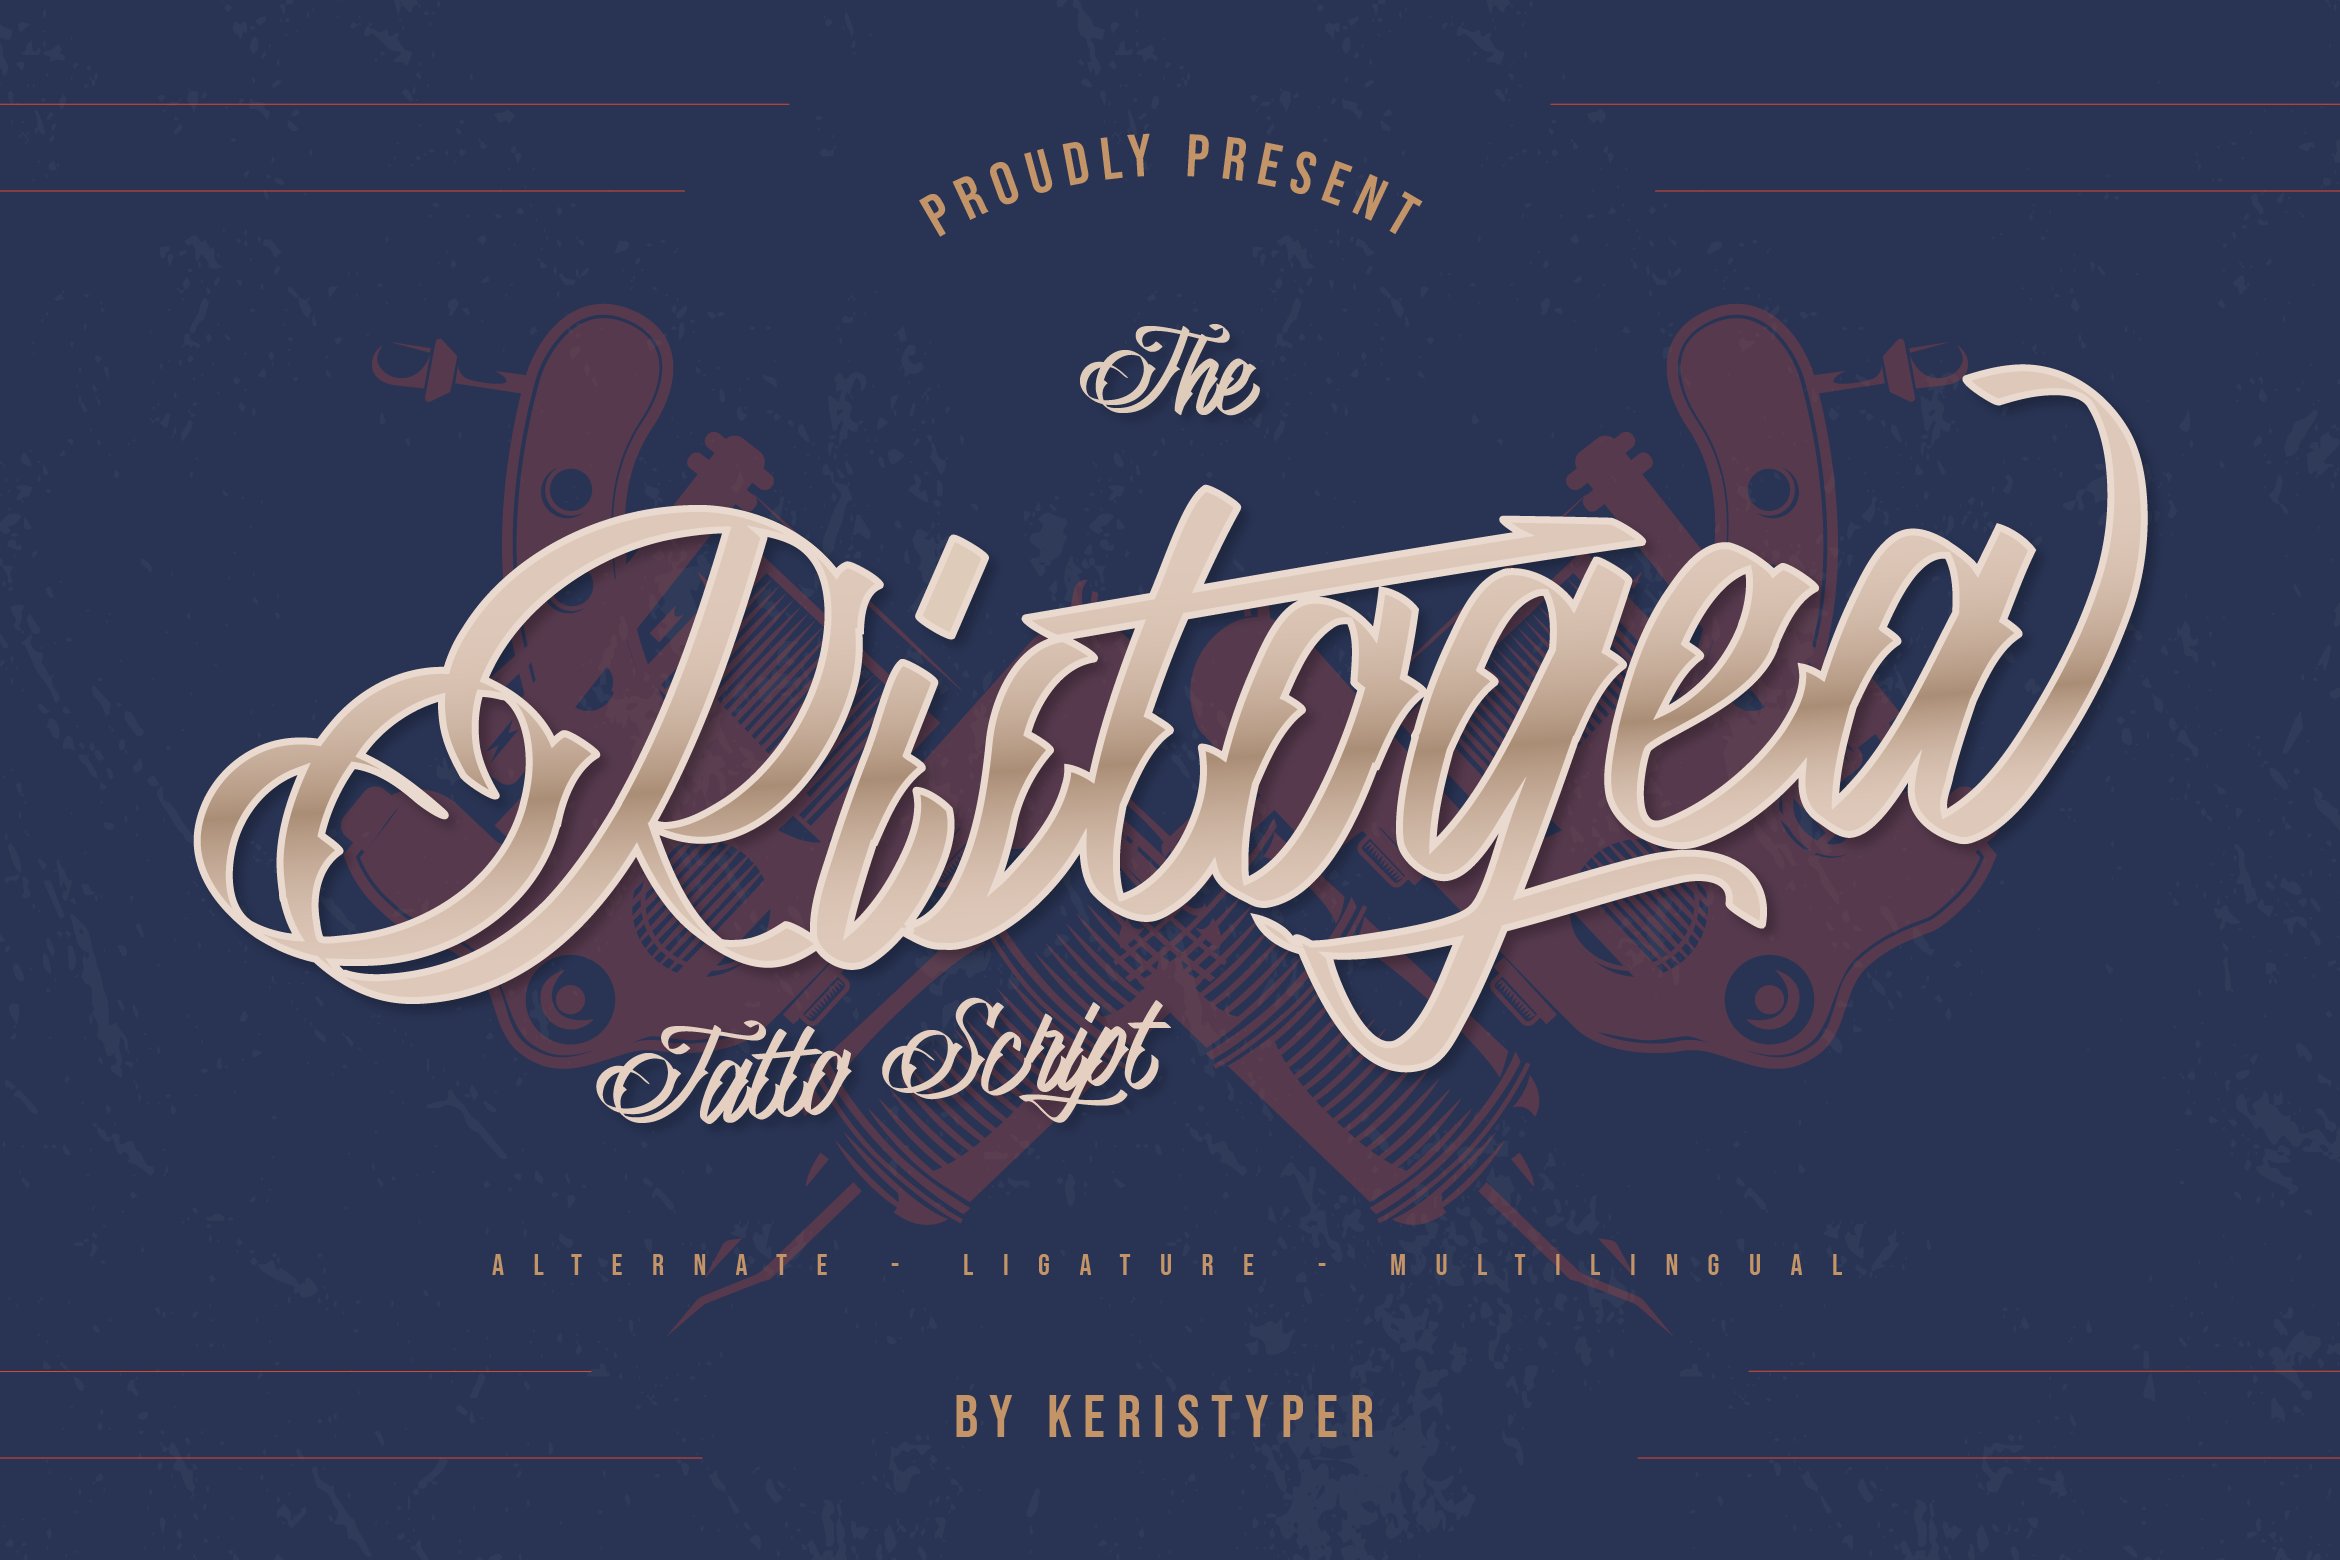 Ristogea cover image.